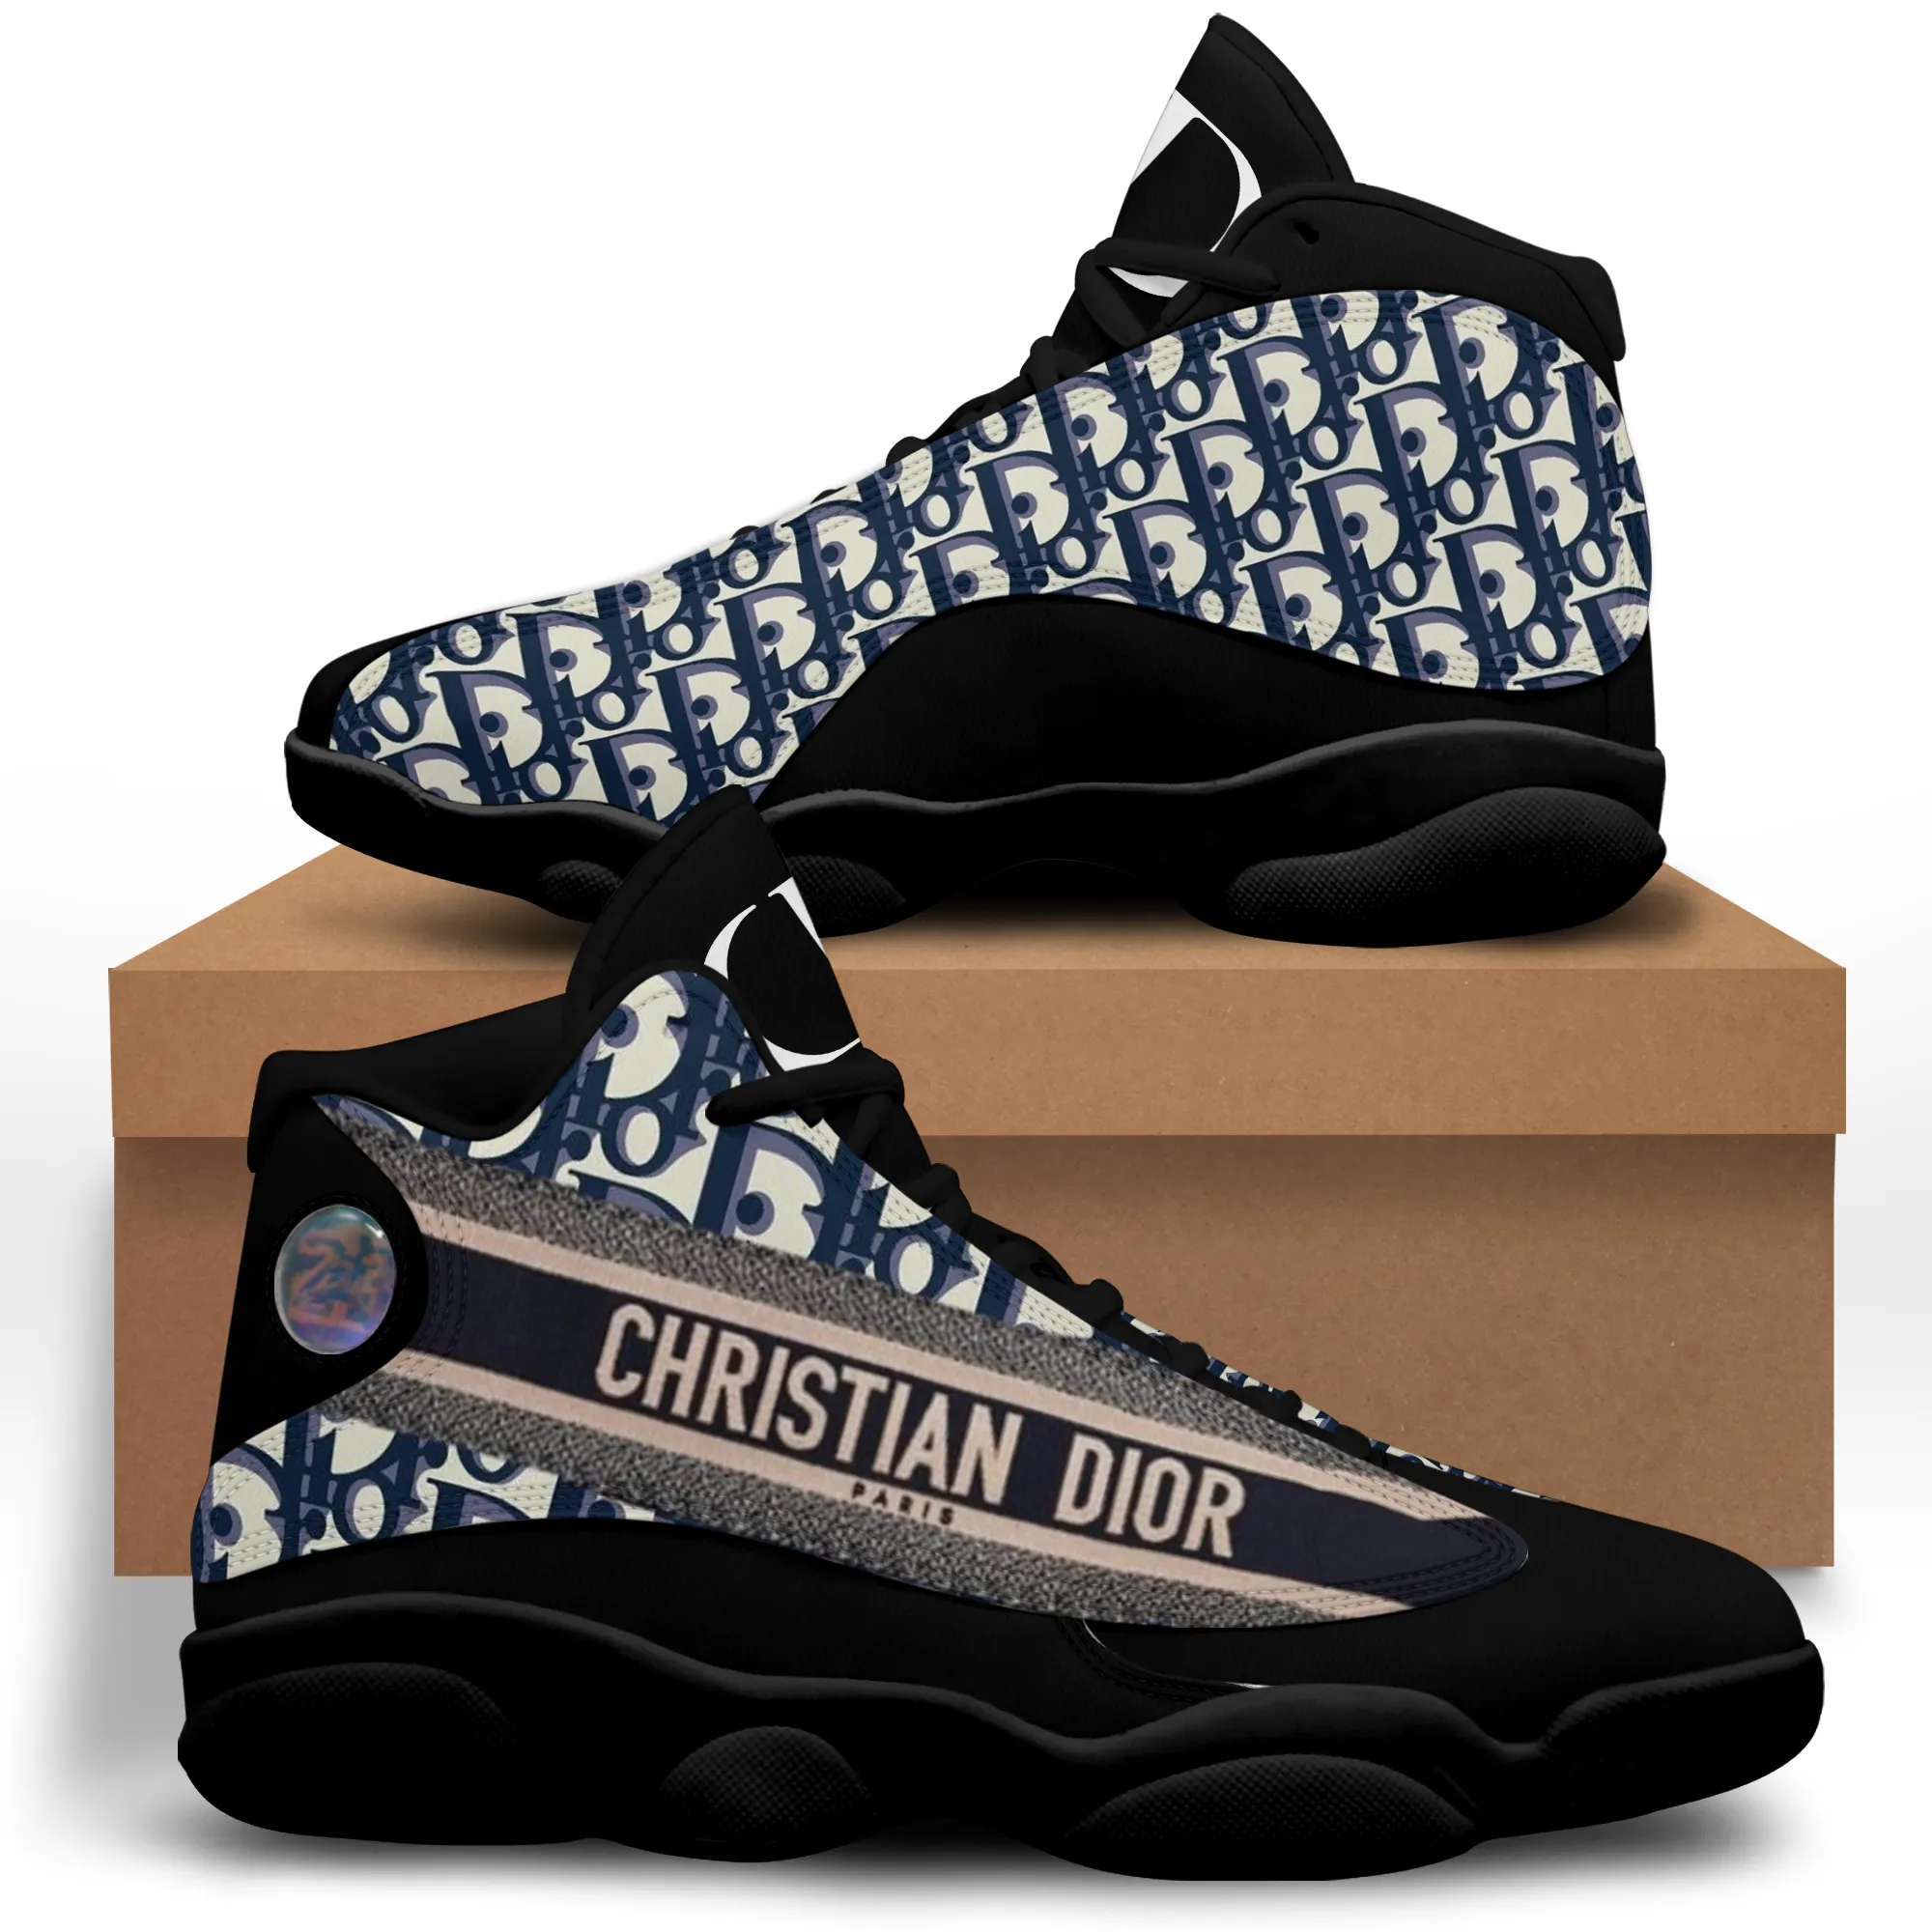 Christian Dior Air Jordan 13 Shoes Sneakers Fashion Luxury Trending